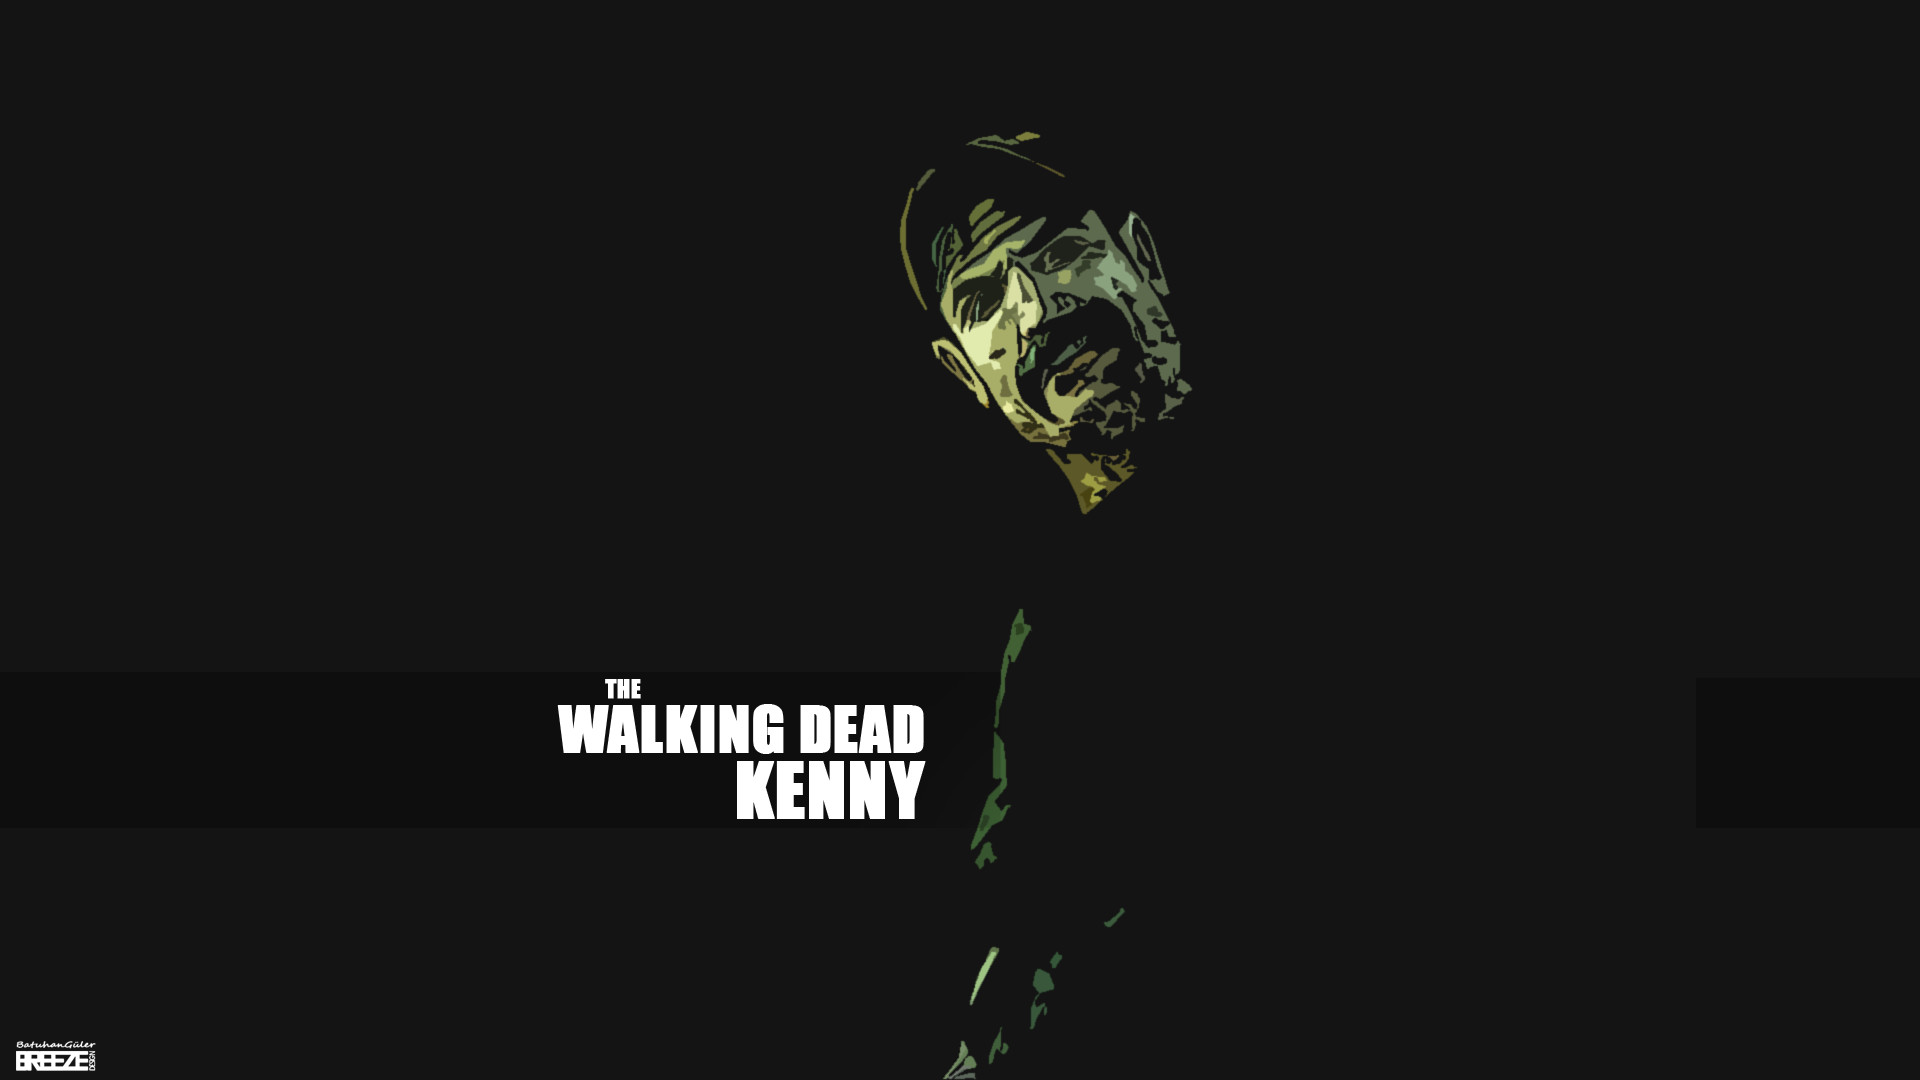 … The Walking Dead Kenny – Wallpaper by Syrastra